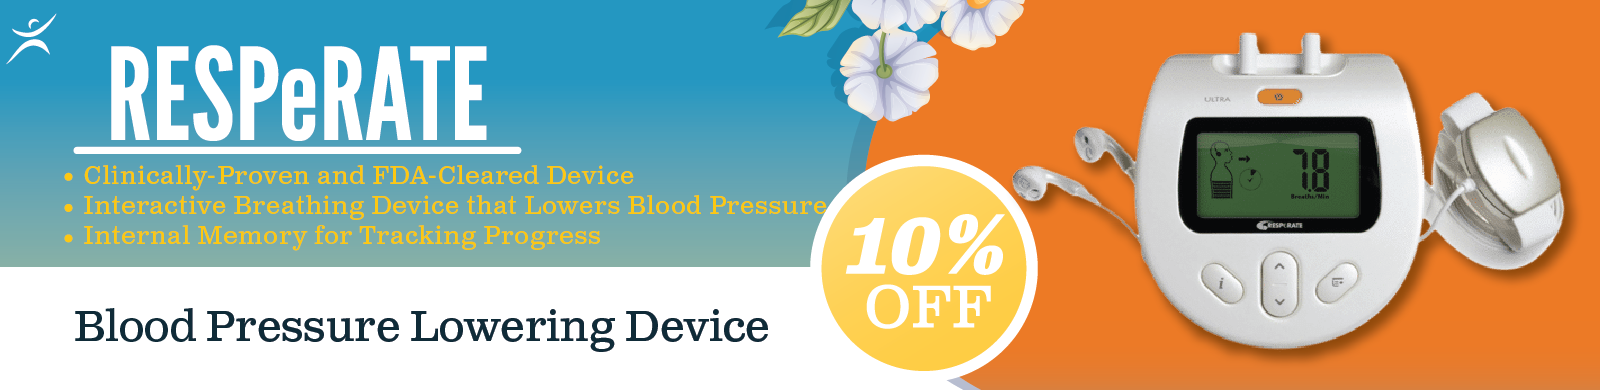 Reperate Blood Pressure Lowering Device